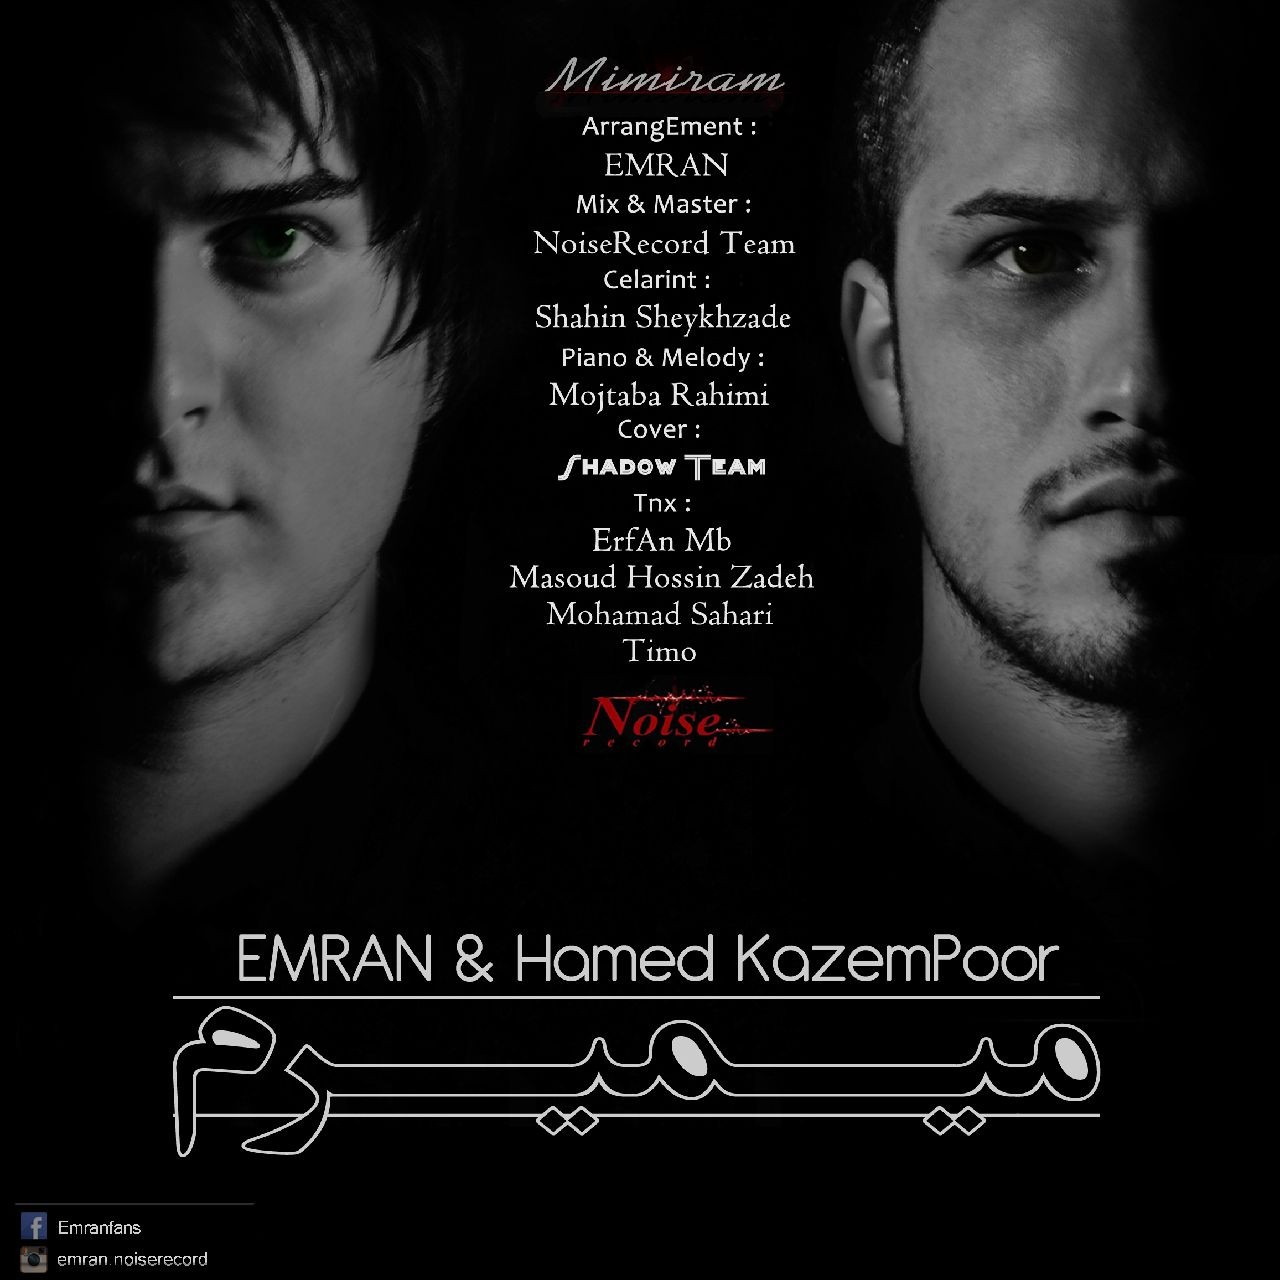  دانلود آهنگ جدید عمران - میمیرم | Download New Music By Emran - Mimiram (feat. Hamed Kazem Poor)